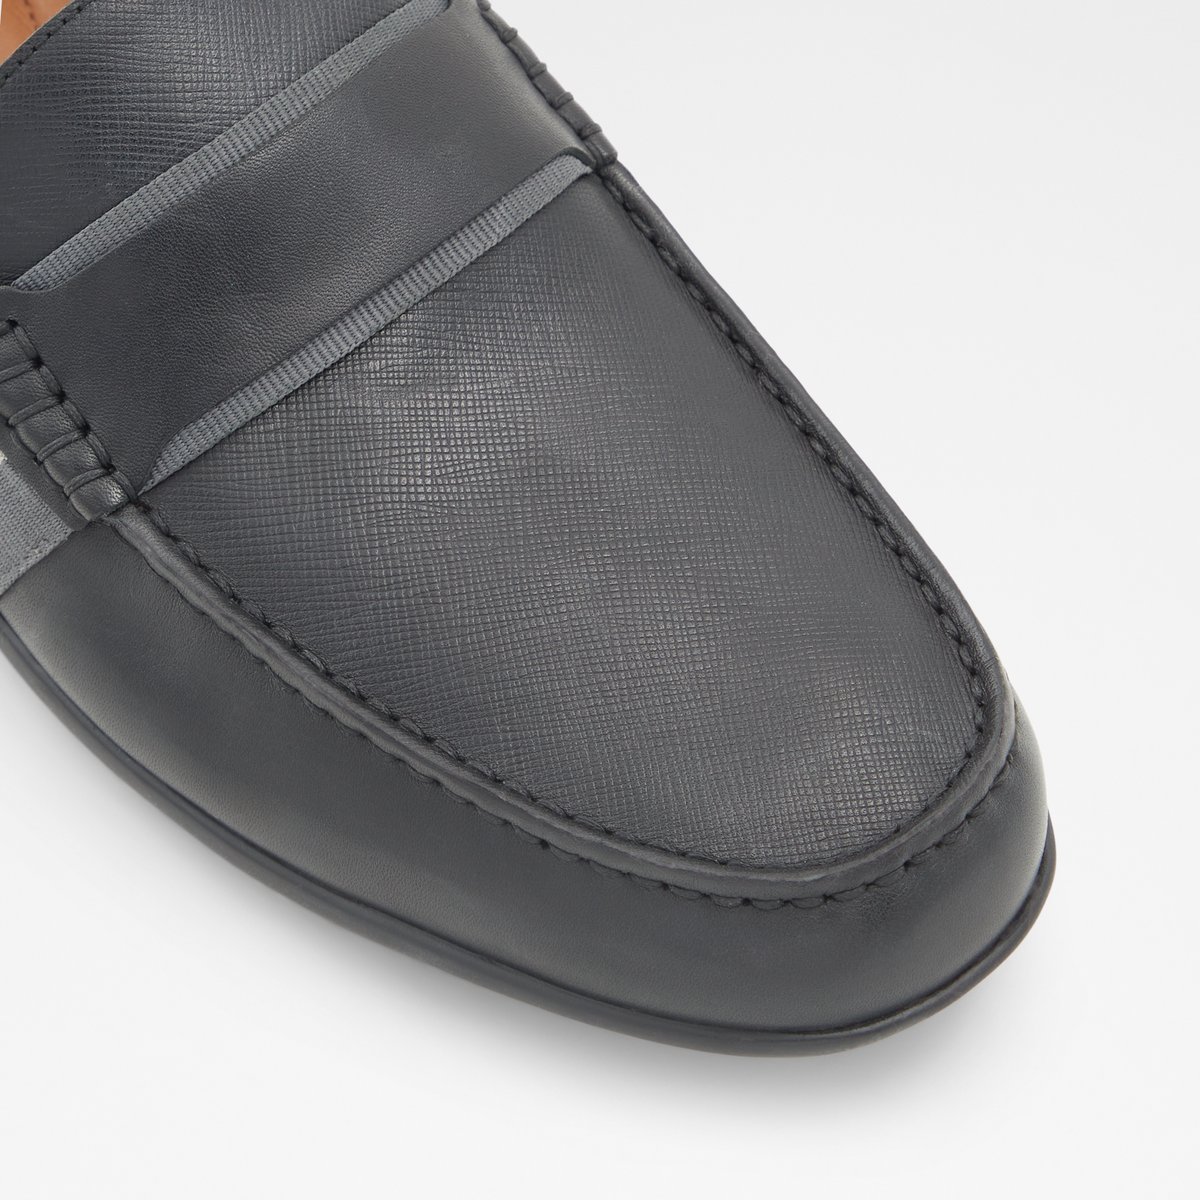 Damianflex Black Men's Loafers & Slip-Ons | ALDO US